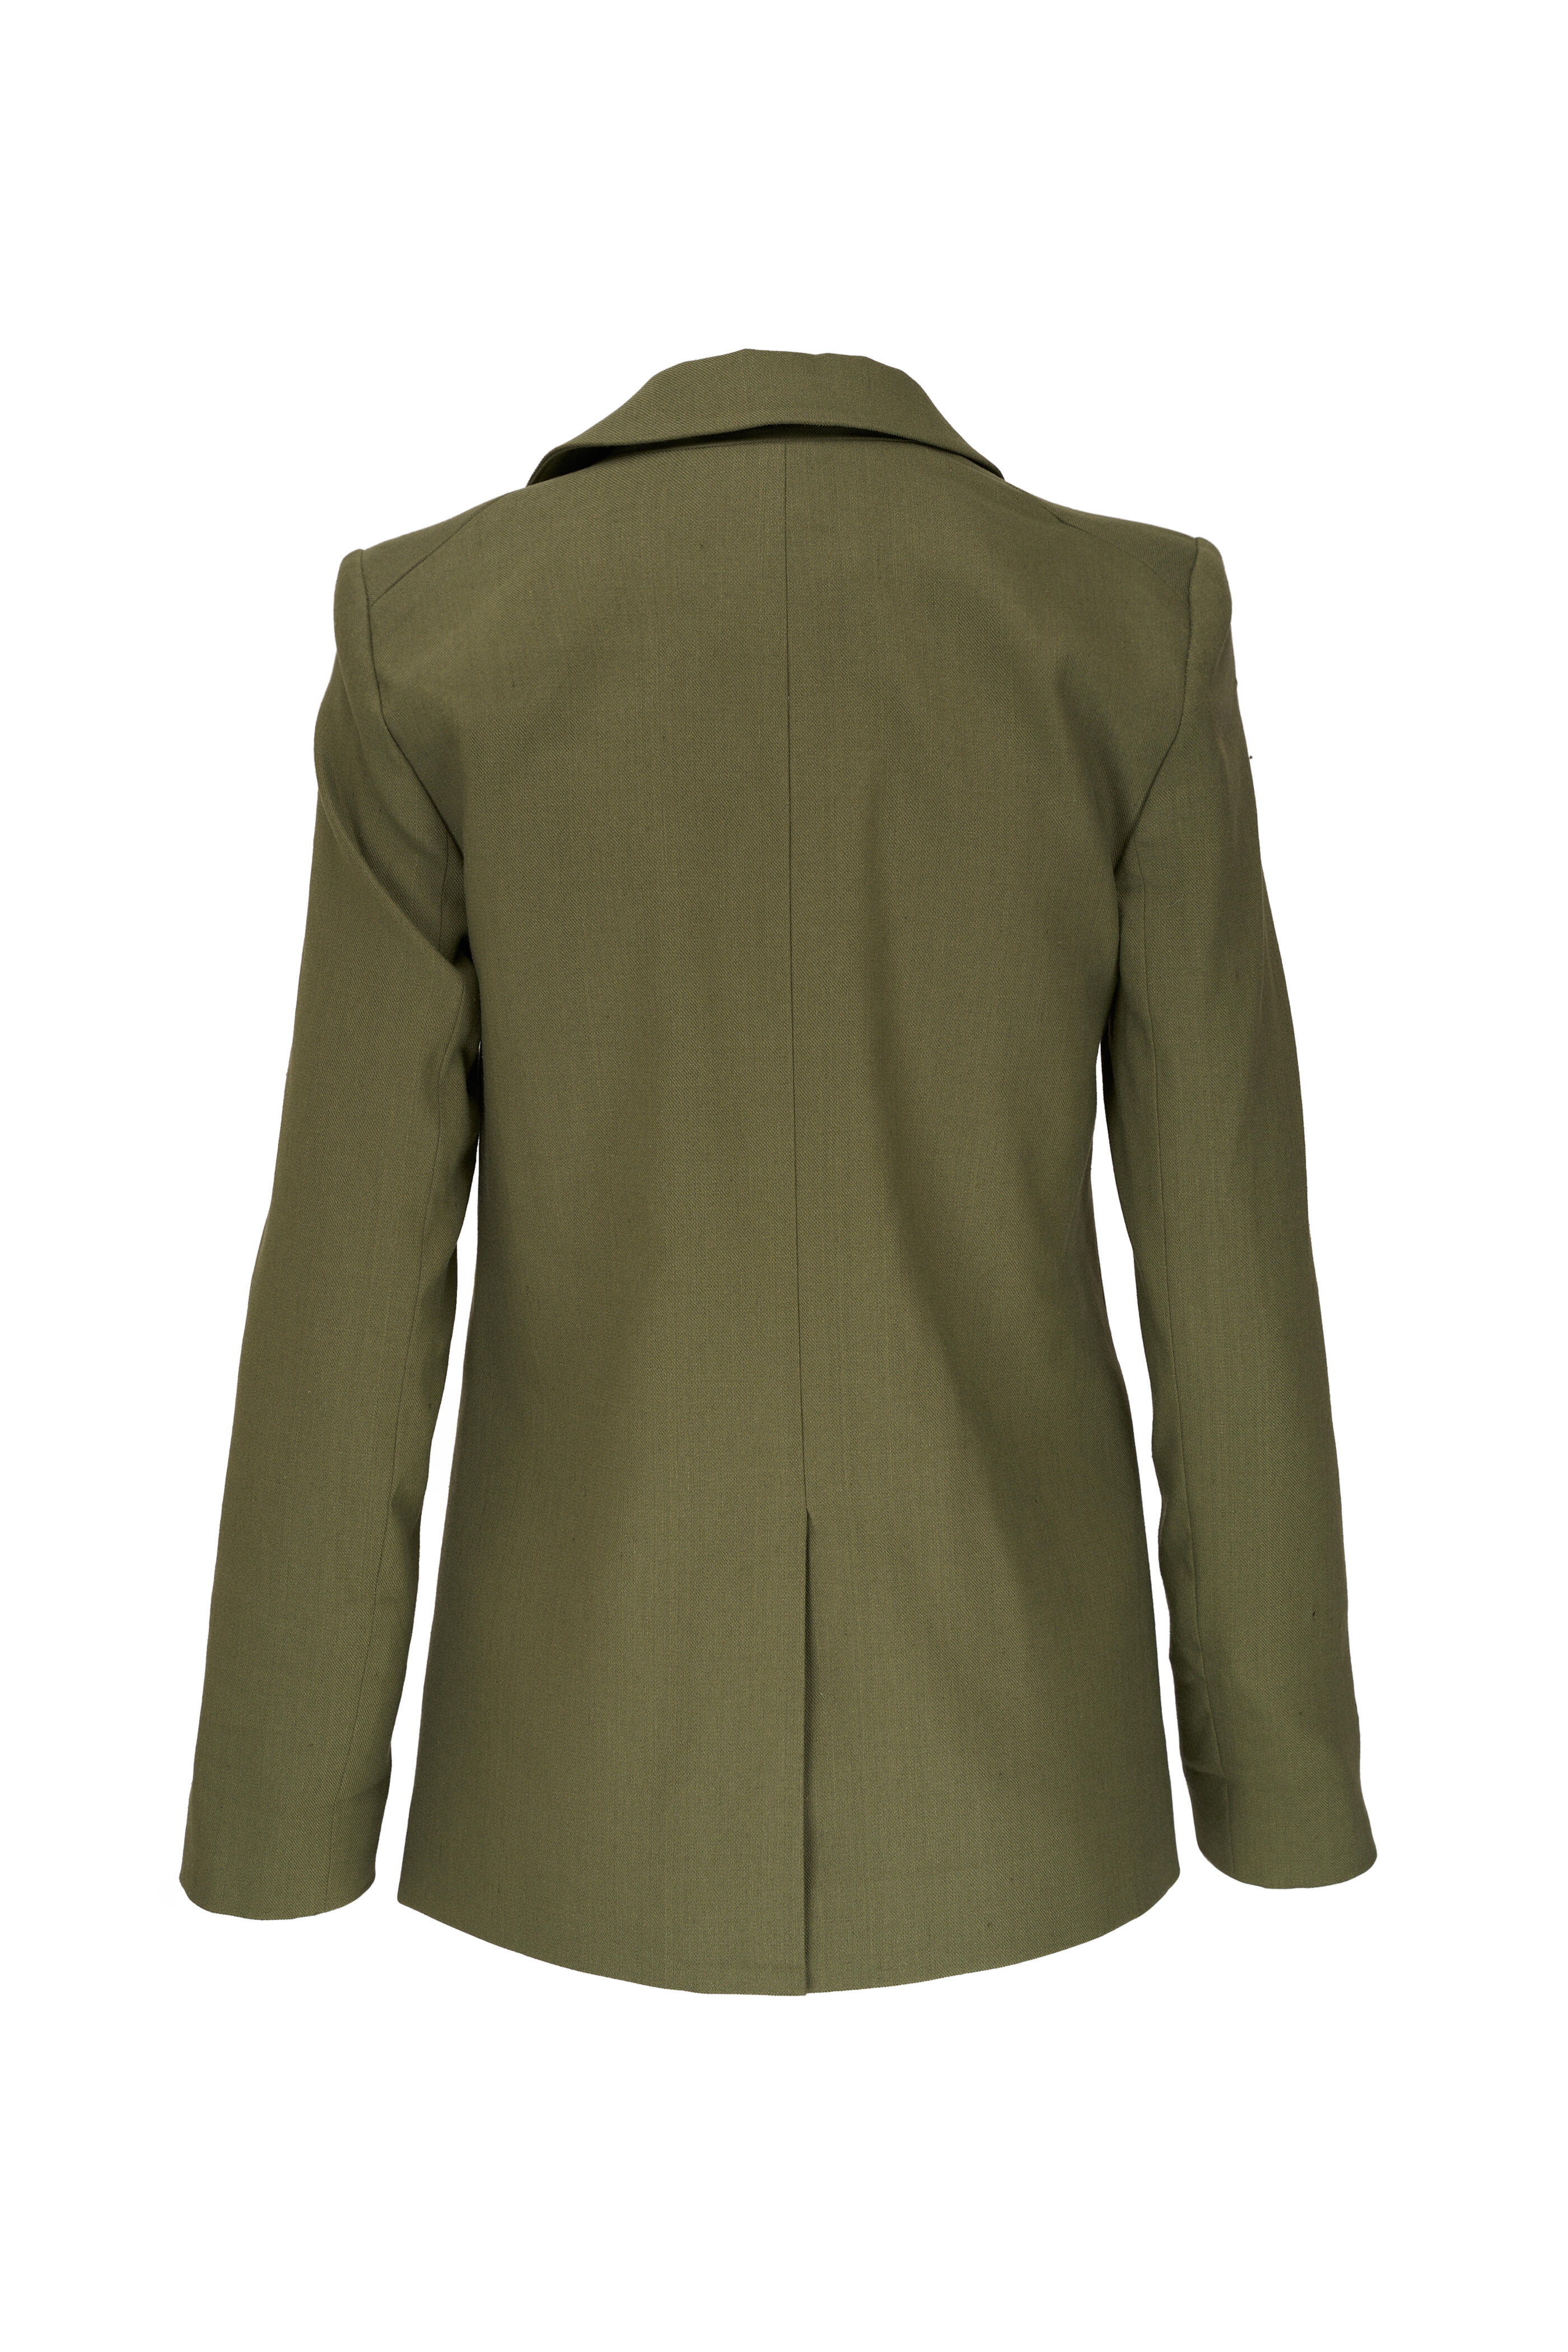 Veronica Beard - Sevi Bright Army Linen Jacket | Mitchell Stores